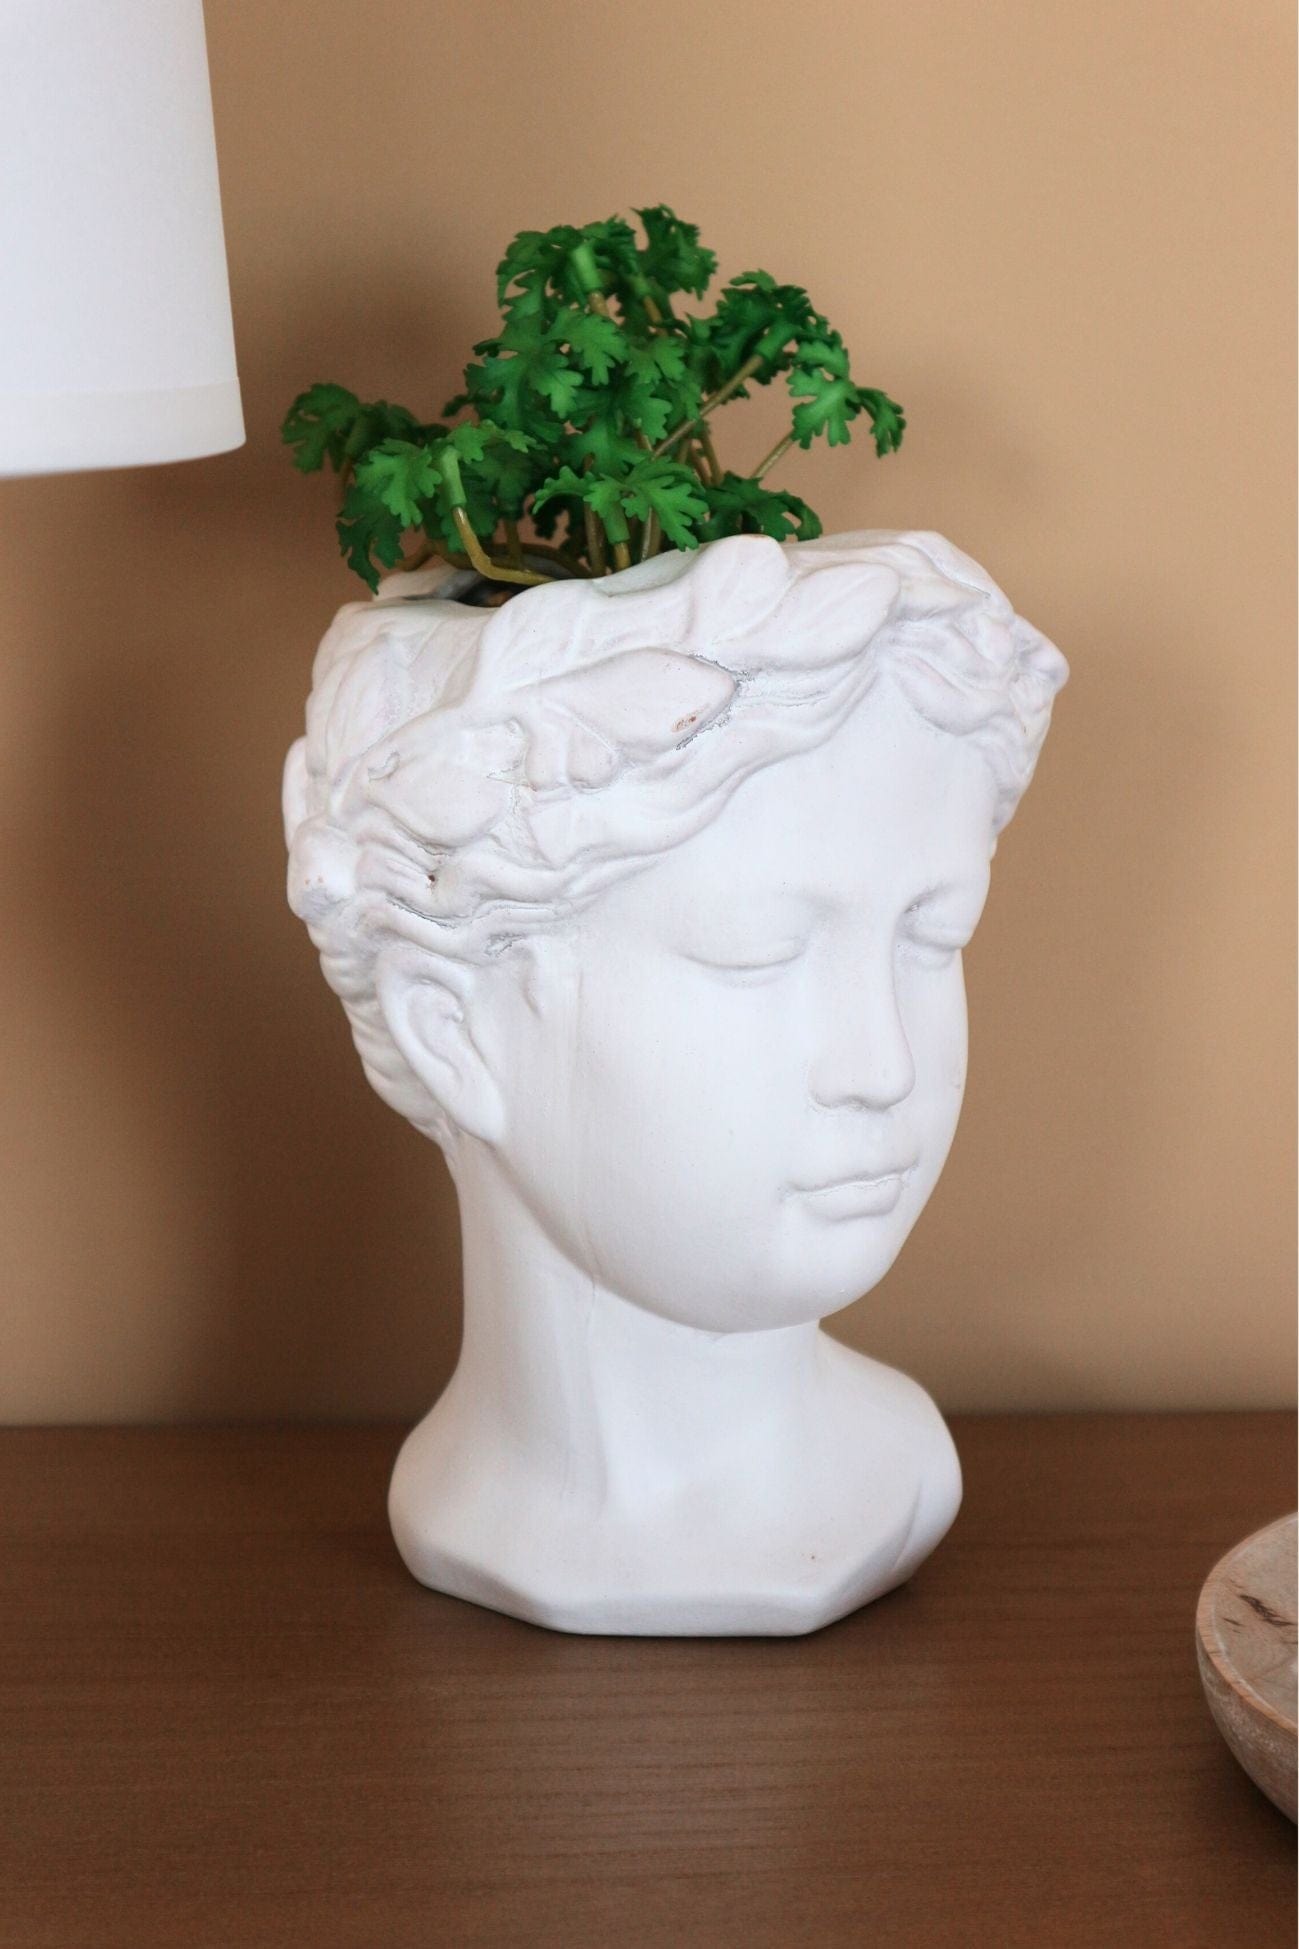 Item International Sylvia Sylvia - Piantina artificiale in ceramica con viso | Item International